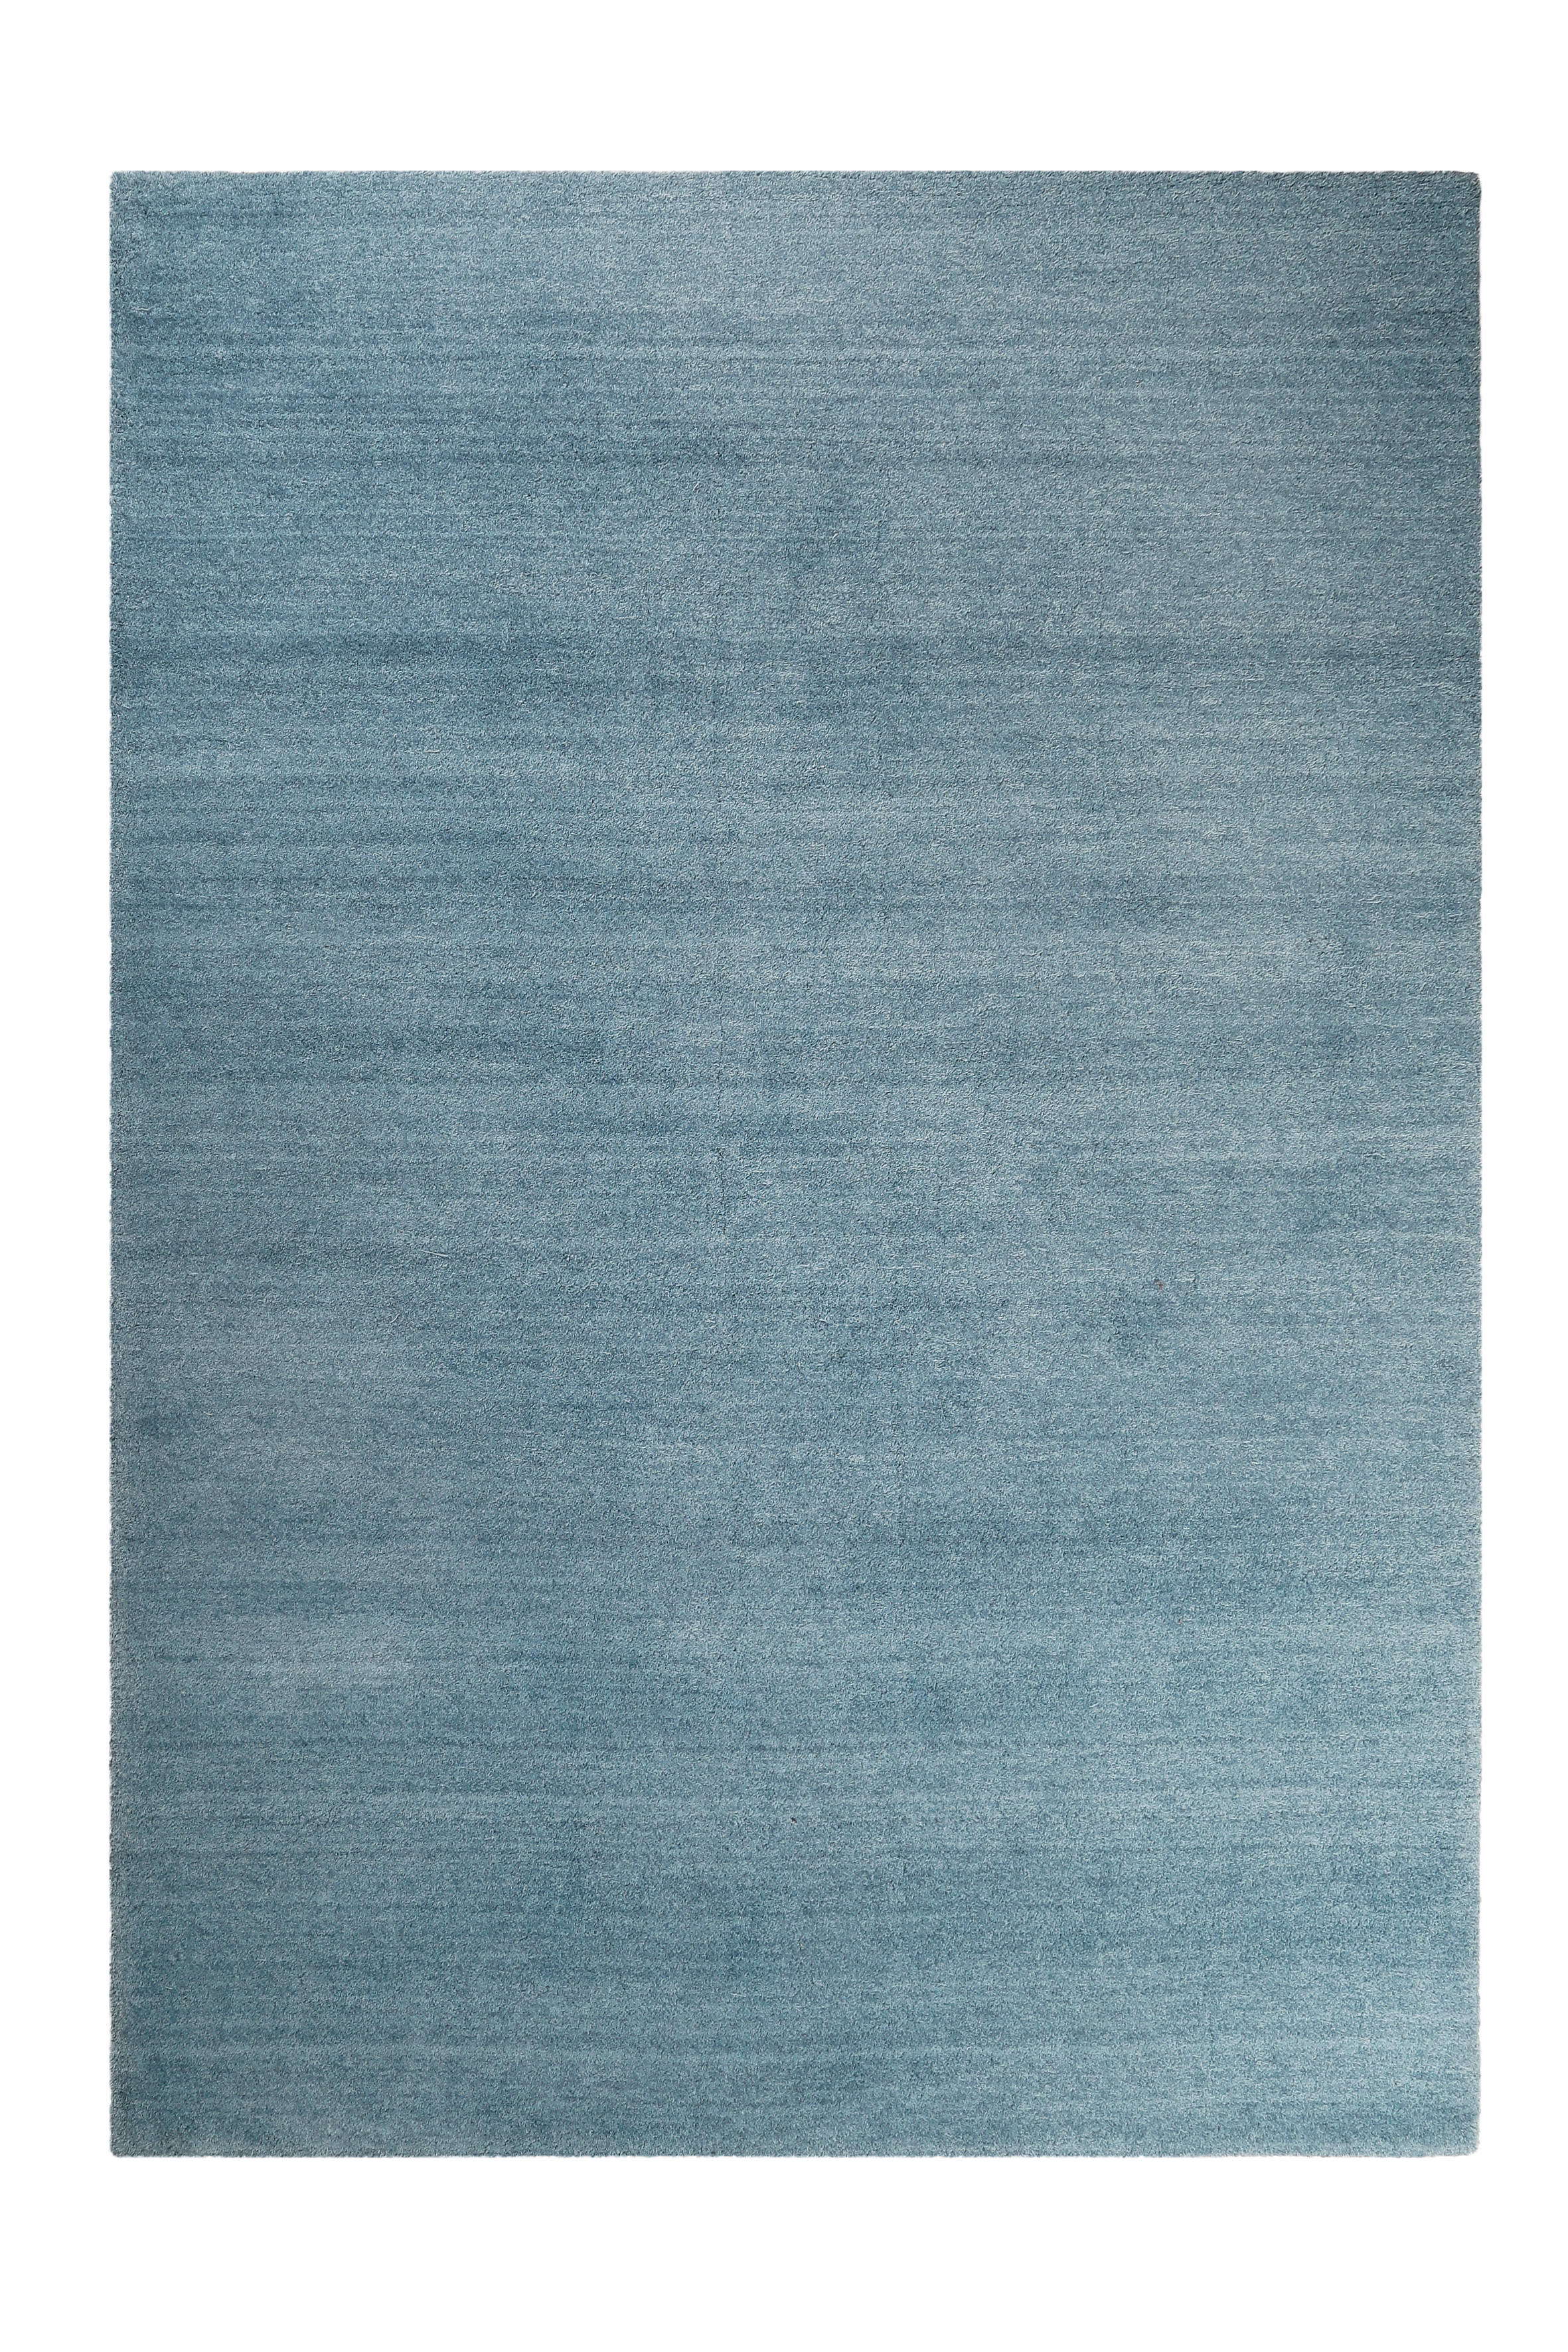 Esprit KOBEREC S VYSOKÝM VLASEM, 160/230 cm, modrá - modrá - textil